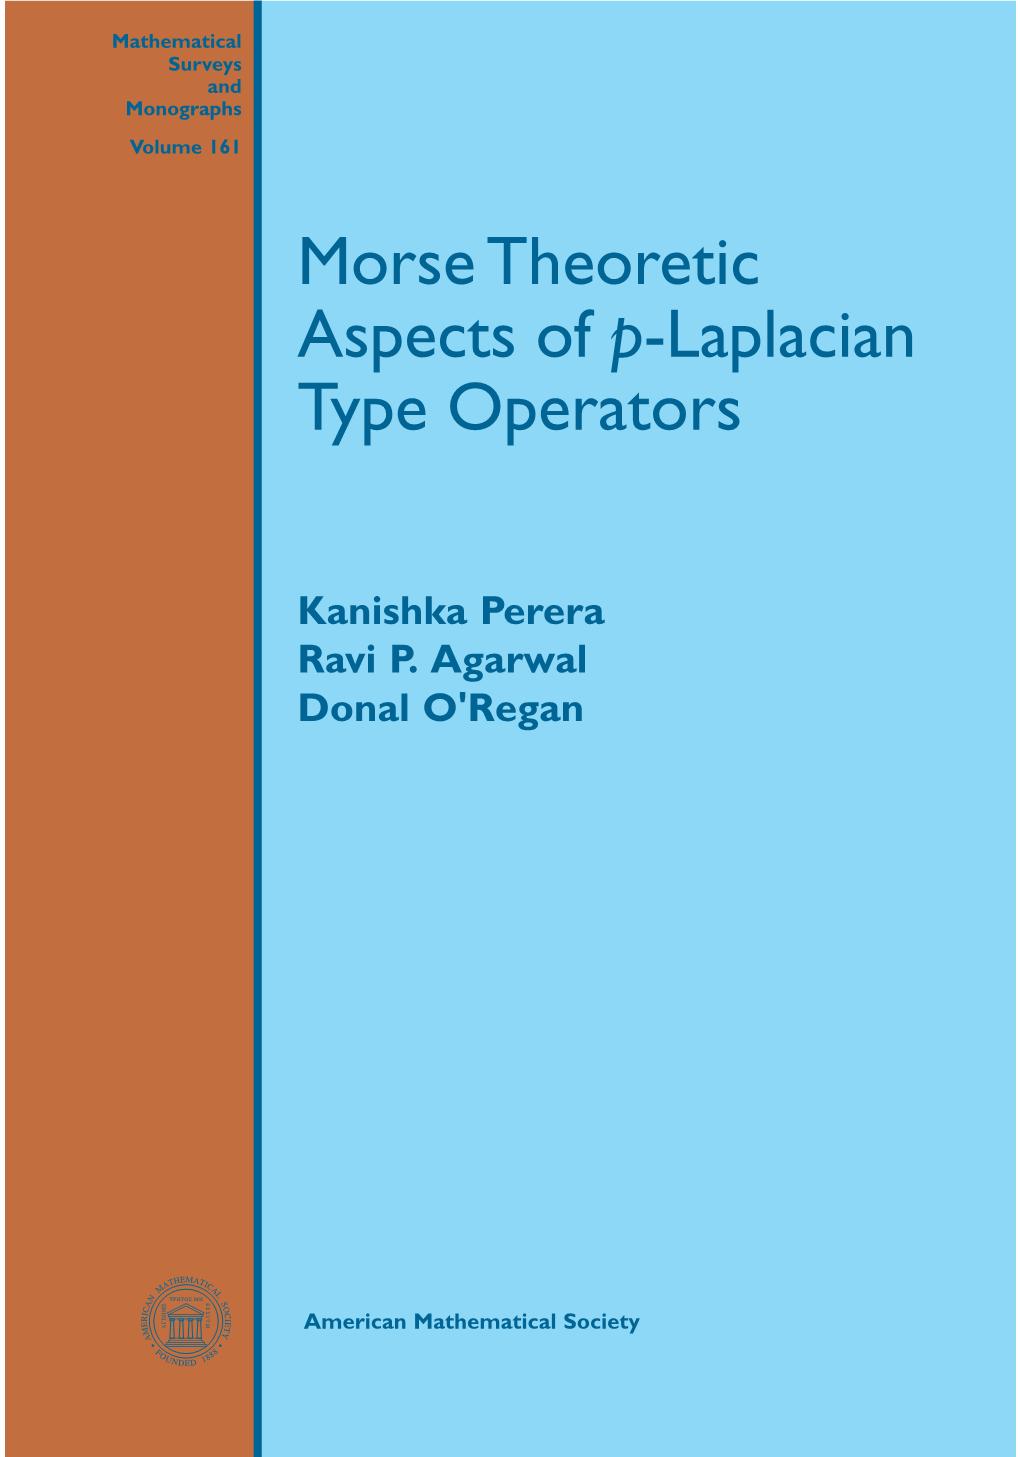 Morse Theoretic Aspects of P-Laplacian Type Operators